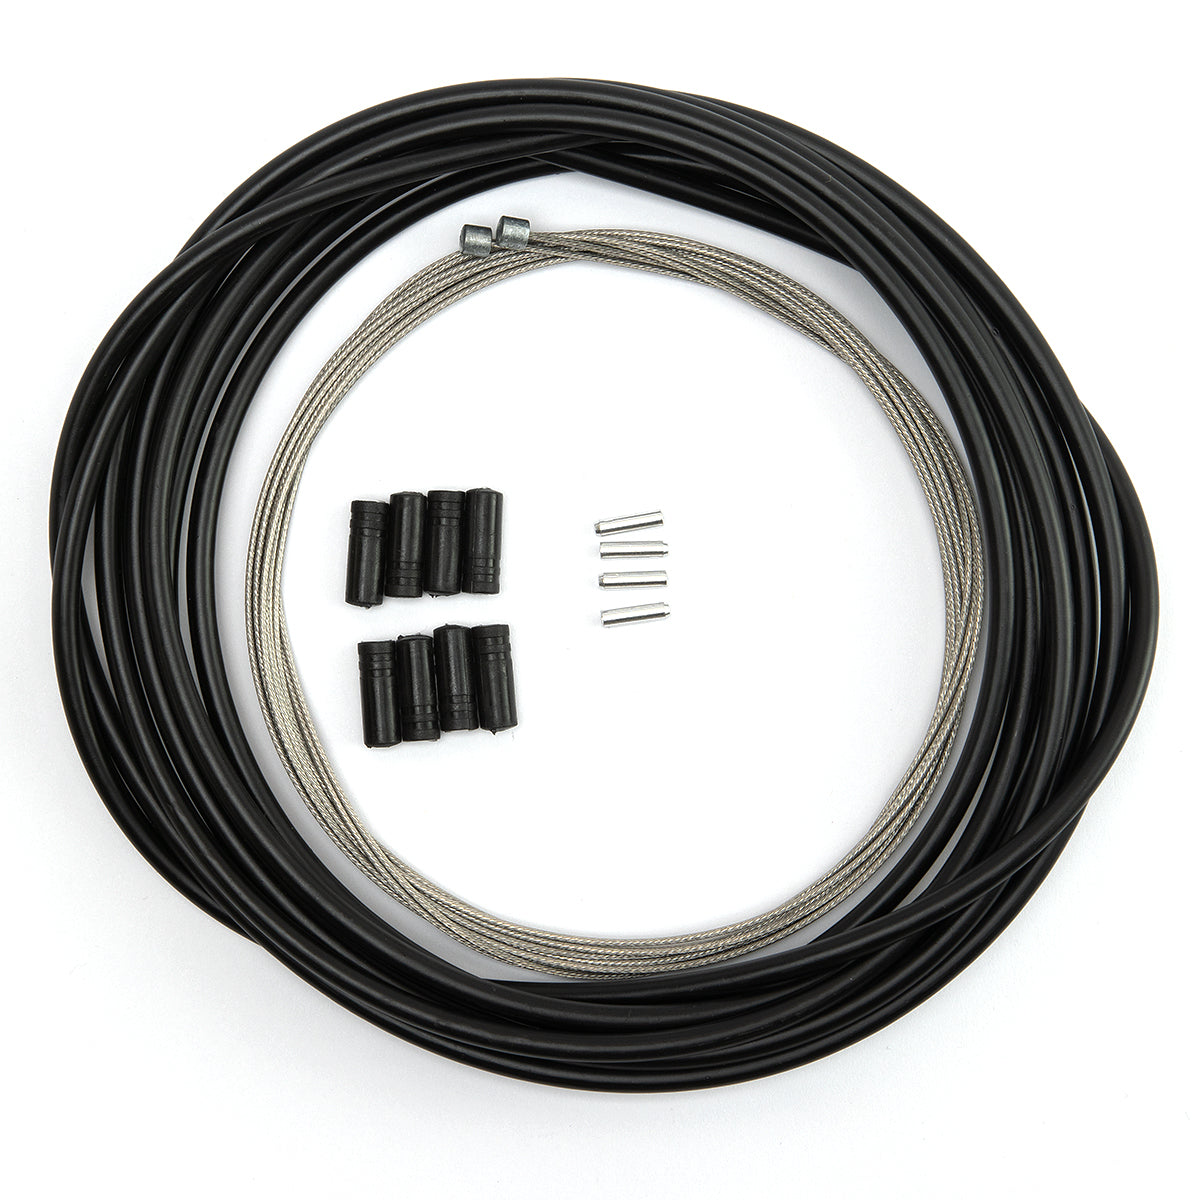 Cleanskin Shift Cable Kit - Black